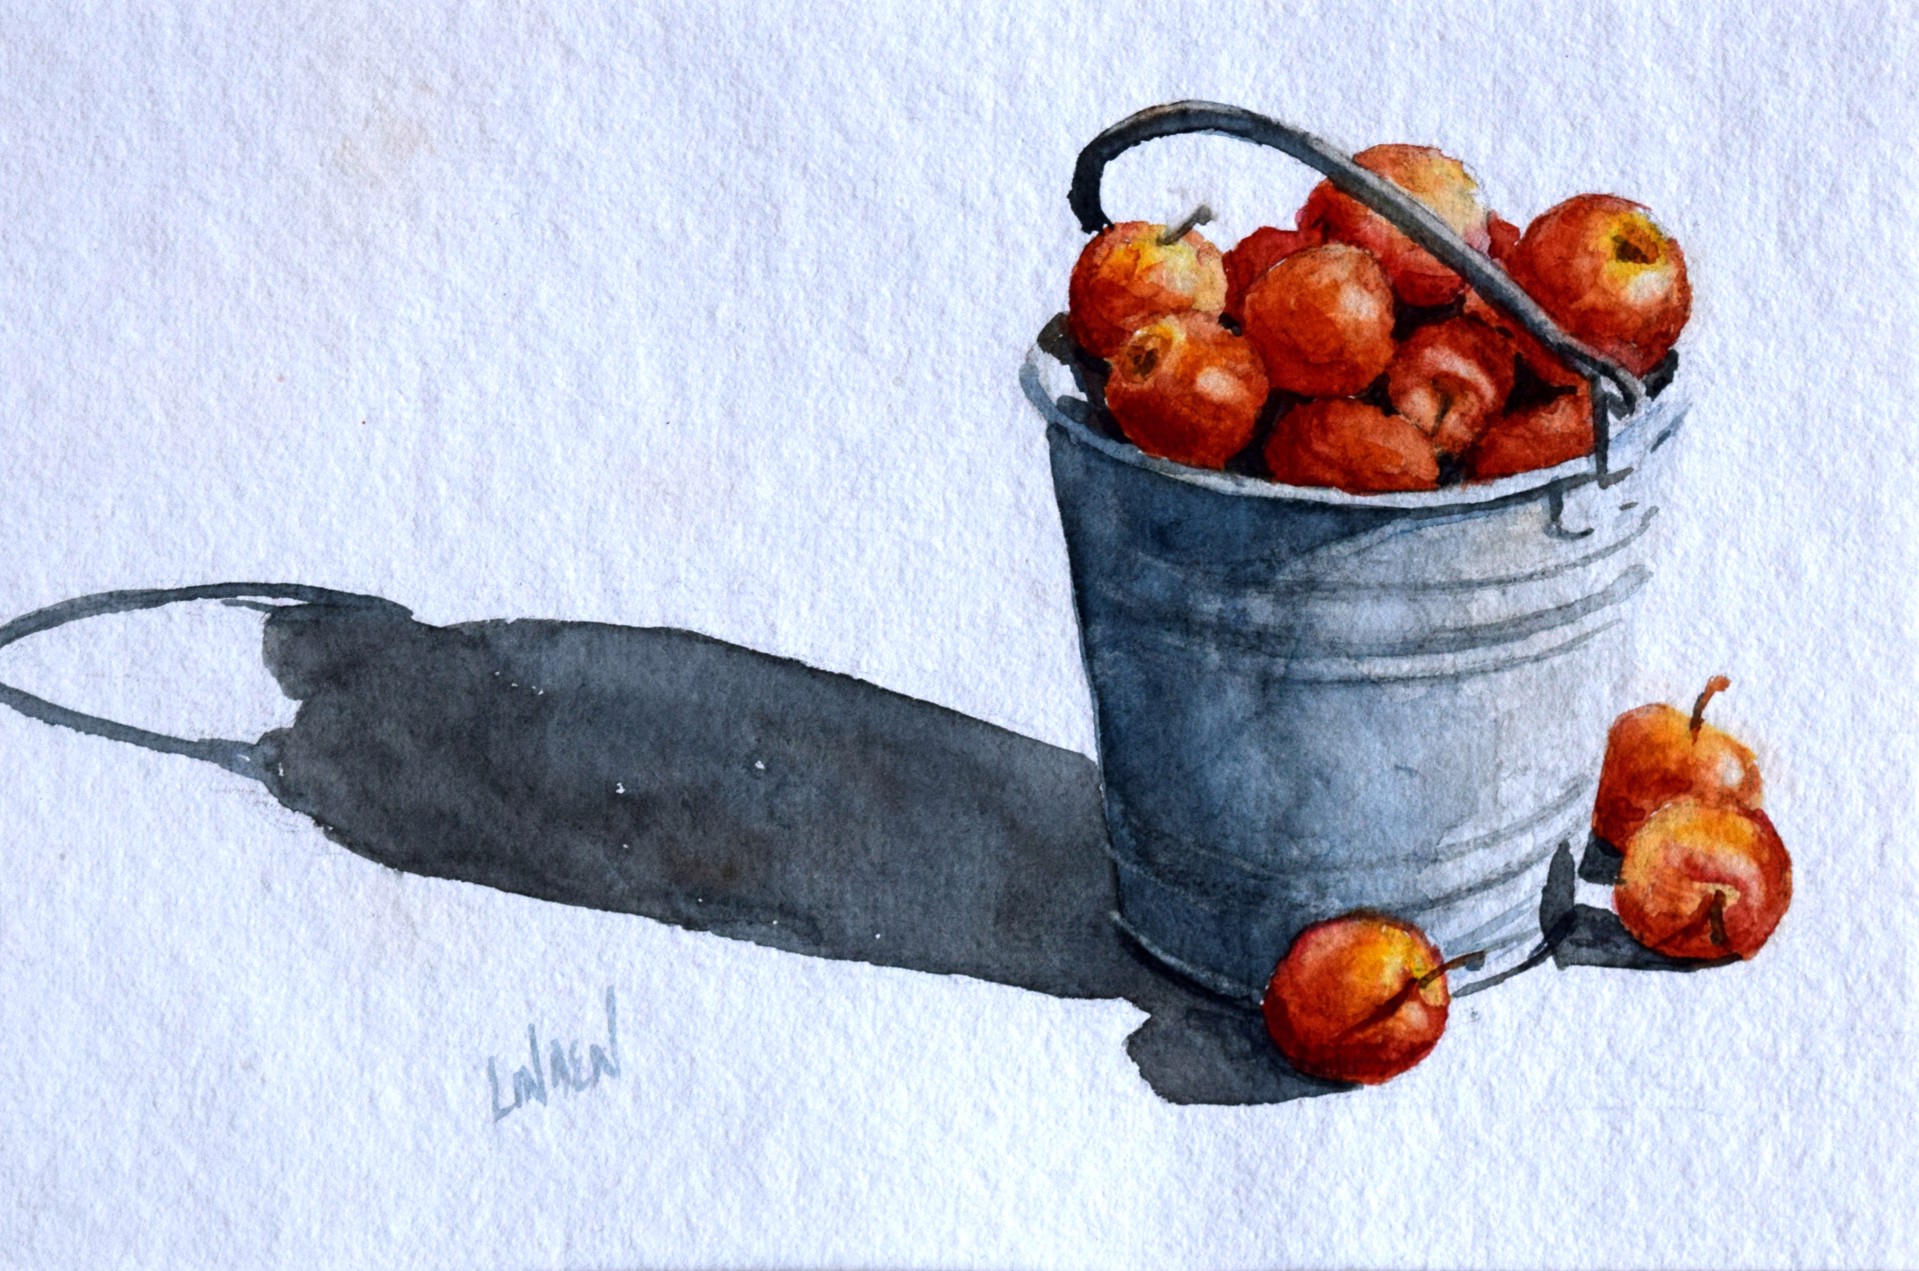 Bucket of Apples by Tom Linden